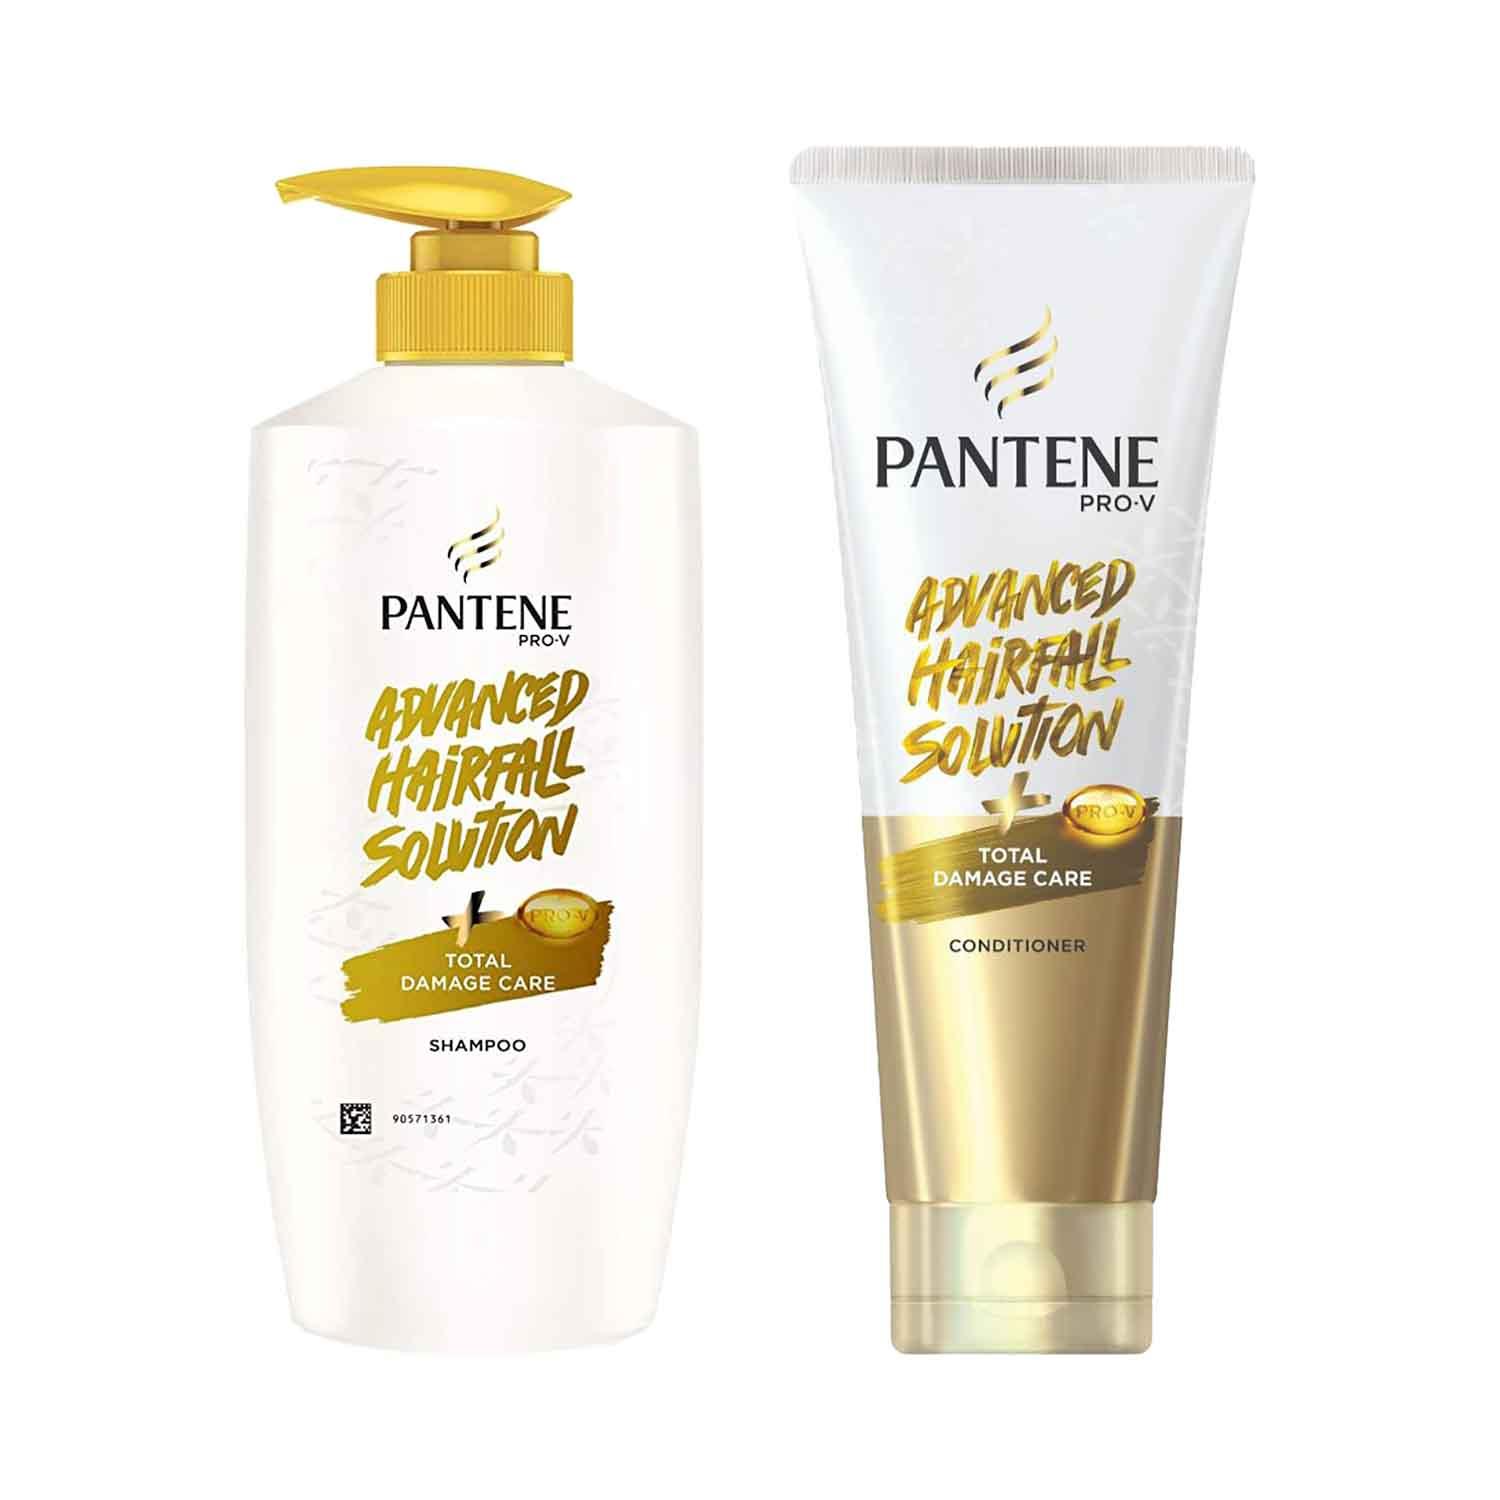 Pantene | Pantene Advanced Hairfall Solution and Pantene Advanced Hair Fall Solution Total Damage Care Combo